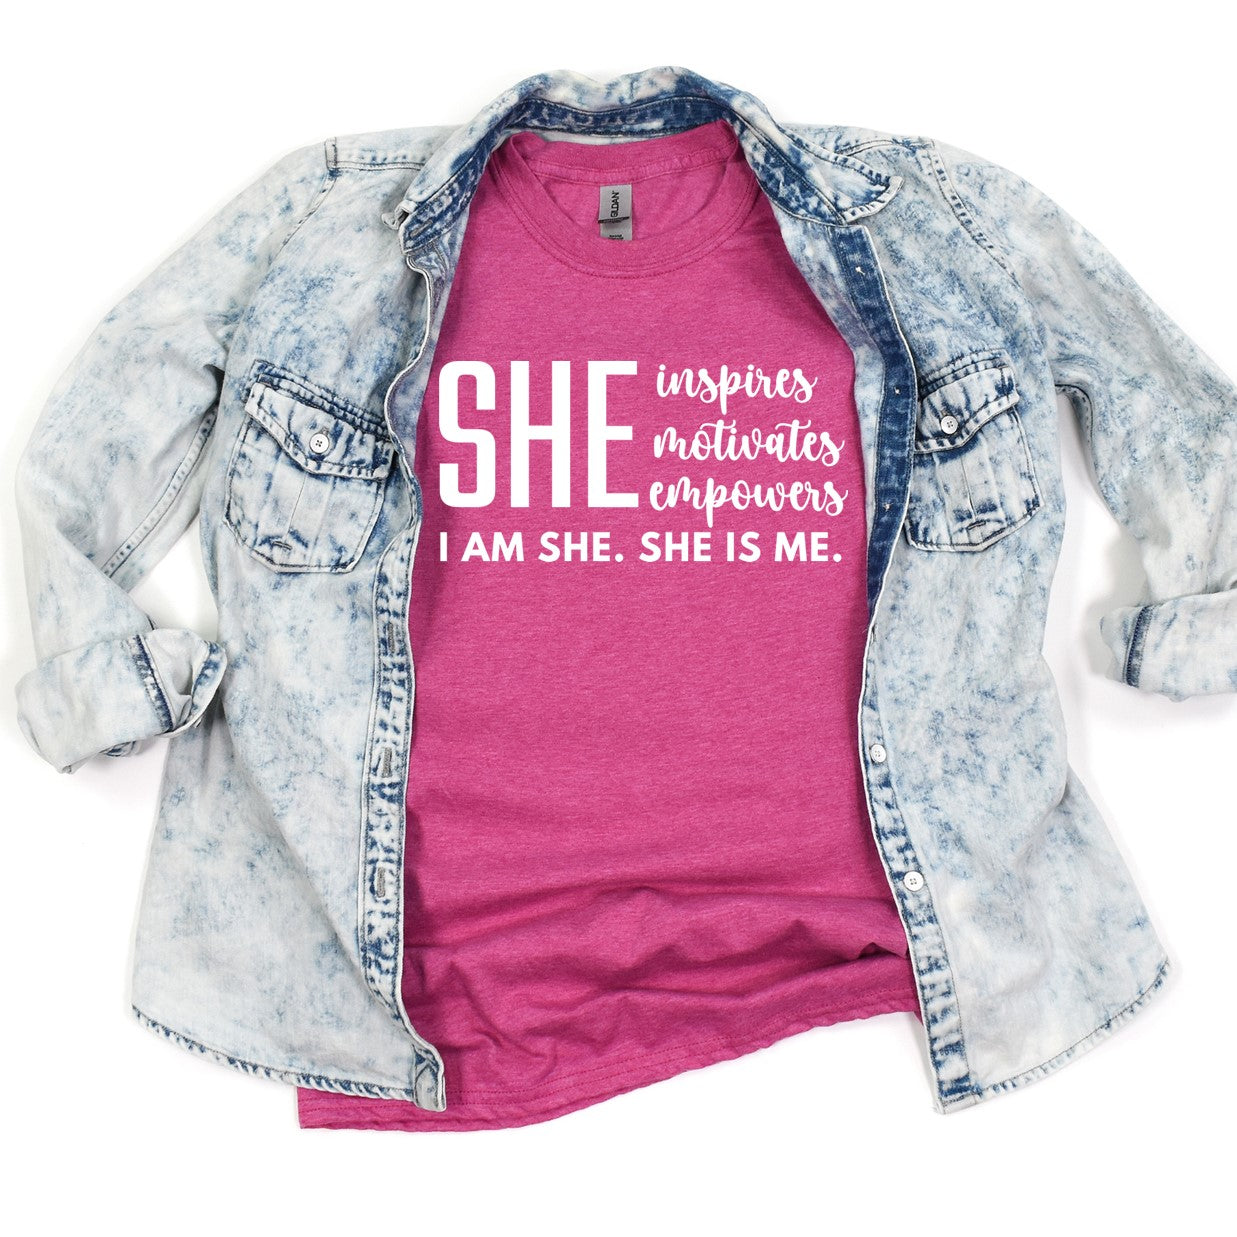 I am She.  She is me.  - Adult Unisex styled soft tee